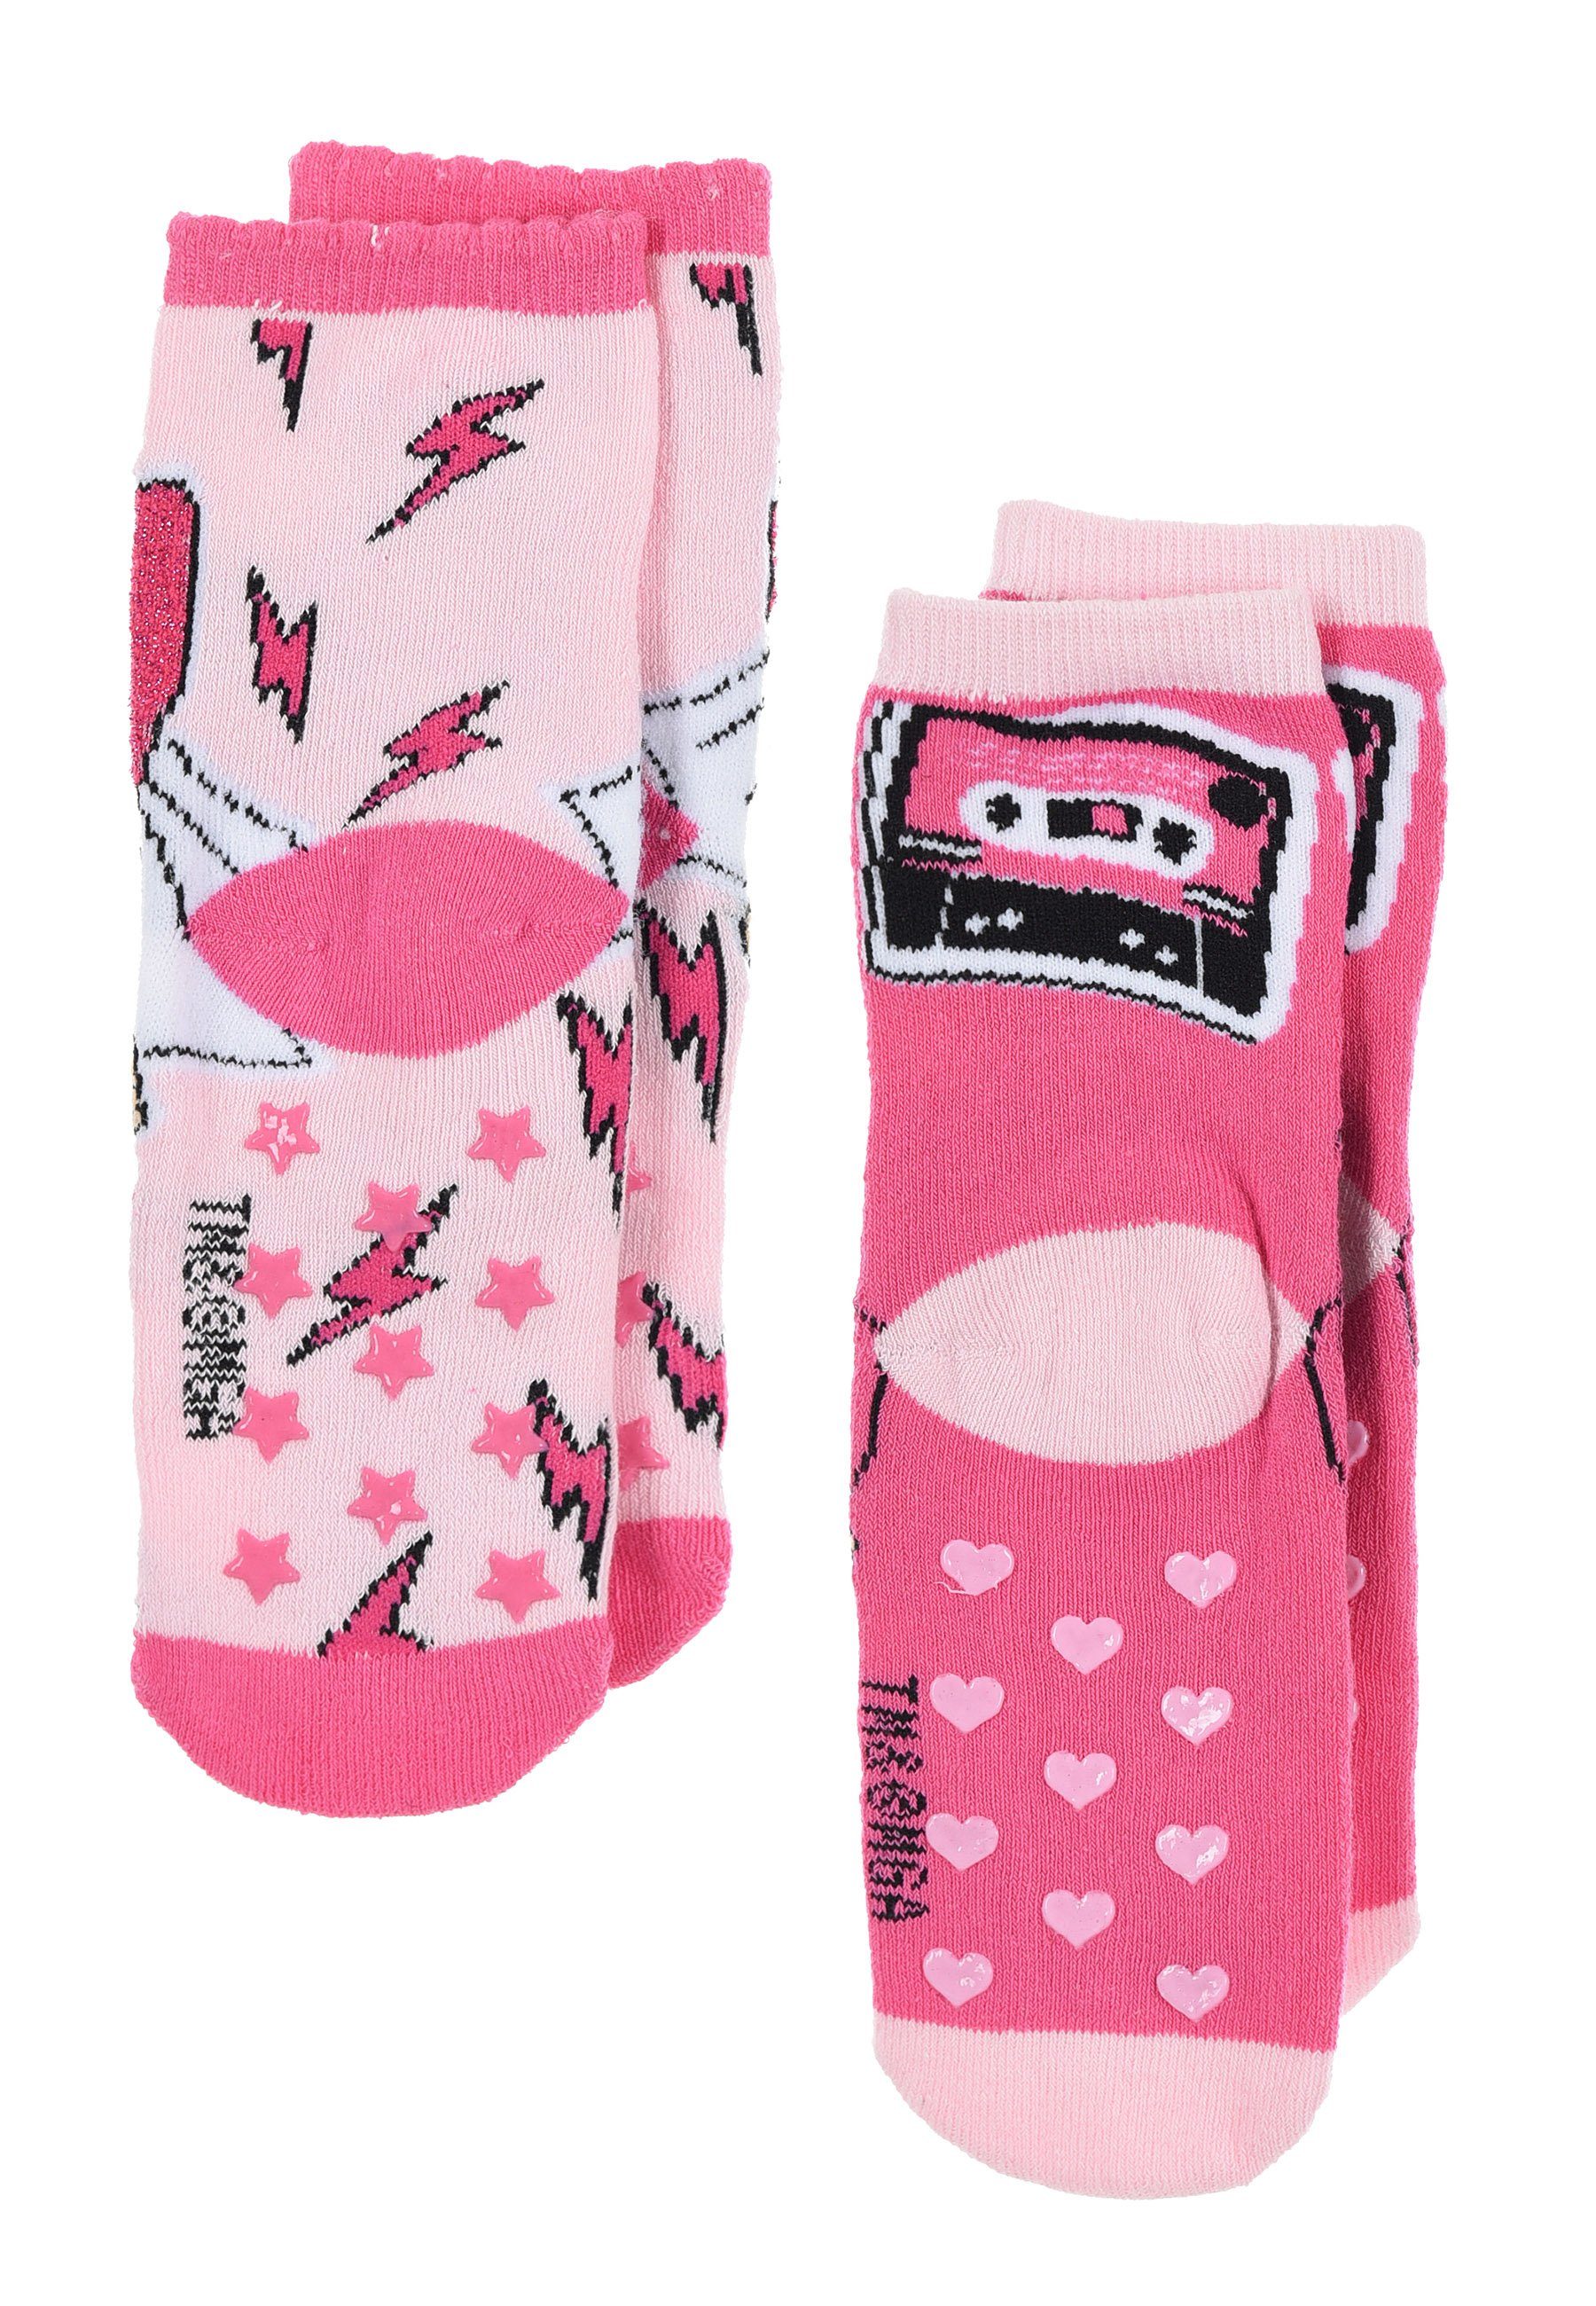 L.O.L. anti-rutsch Noppen Paar Socken Strümpfe Mädchen Gumminoppen ABS-Socken mit (2-Paar) 2 Stopper-Socken Kinder SURPRISE!